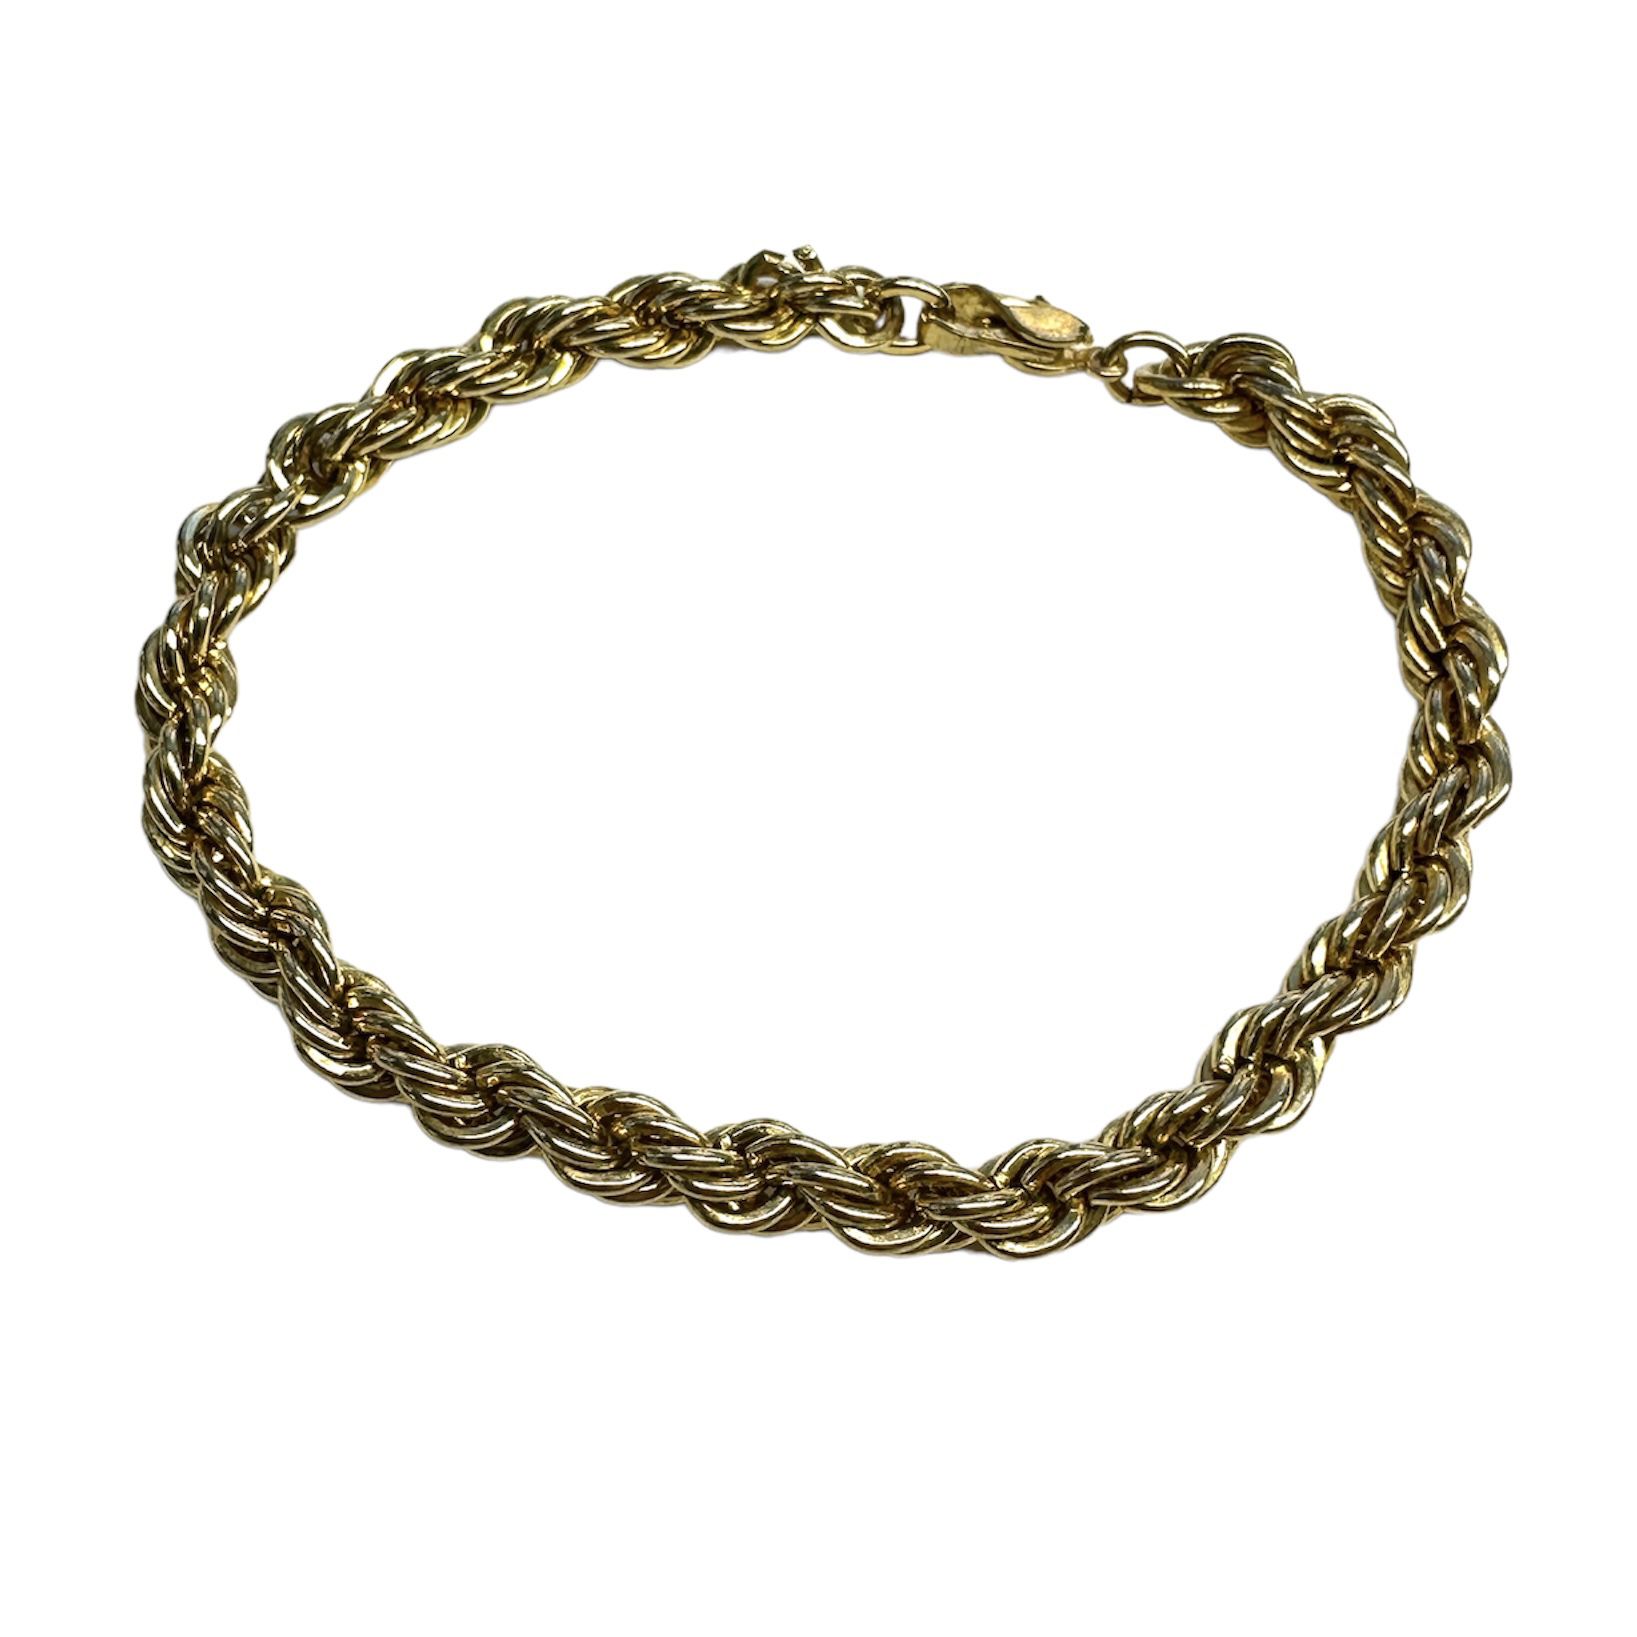 Vintage Gold Chain Fashion Bracelet Jewelry 